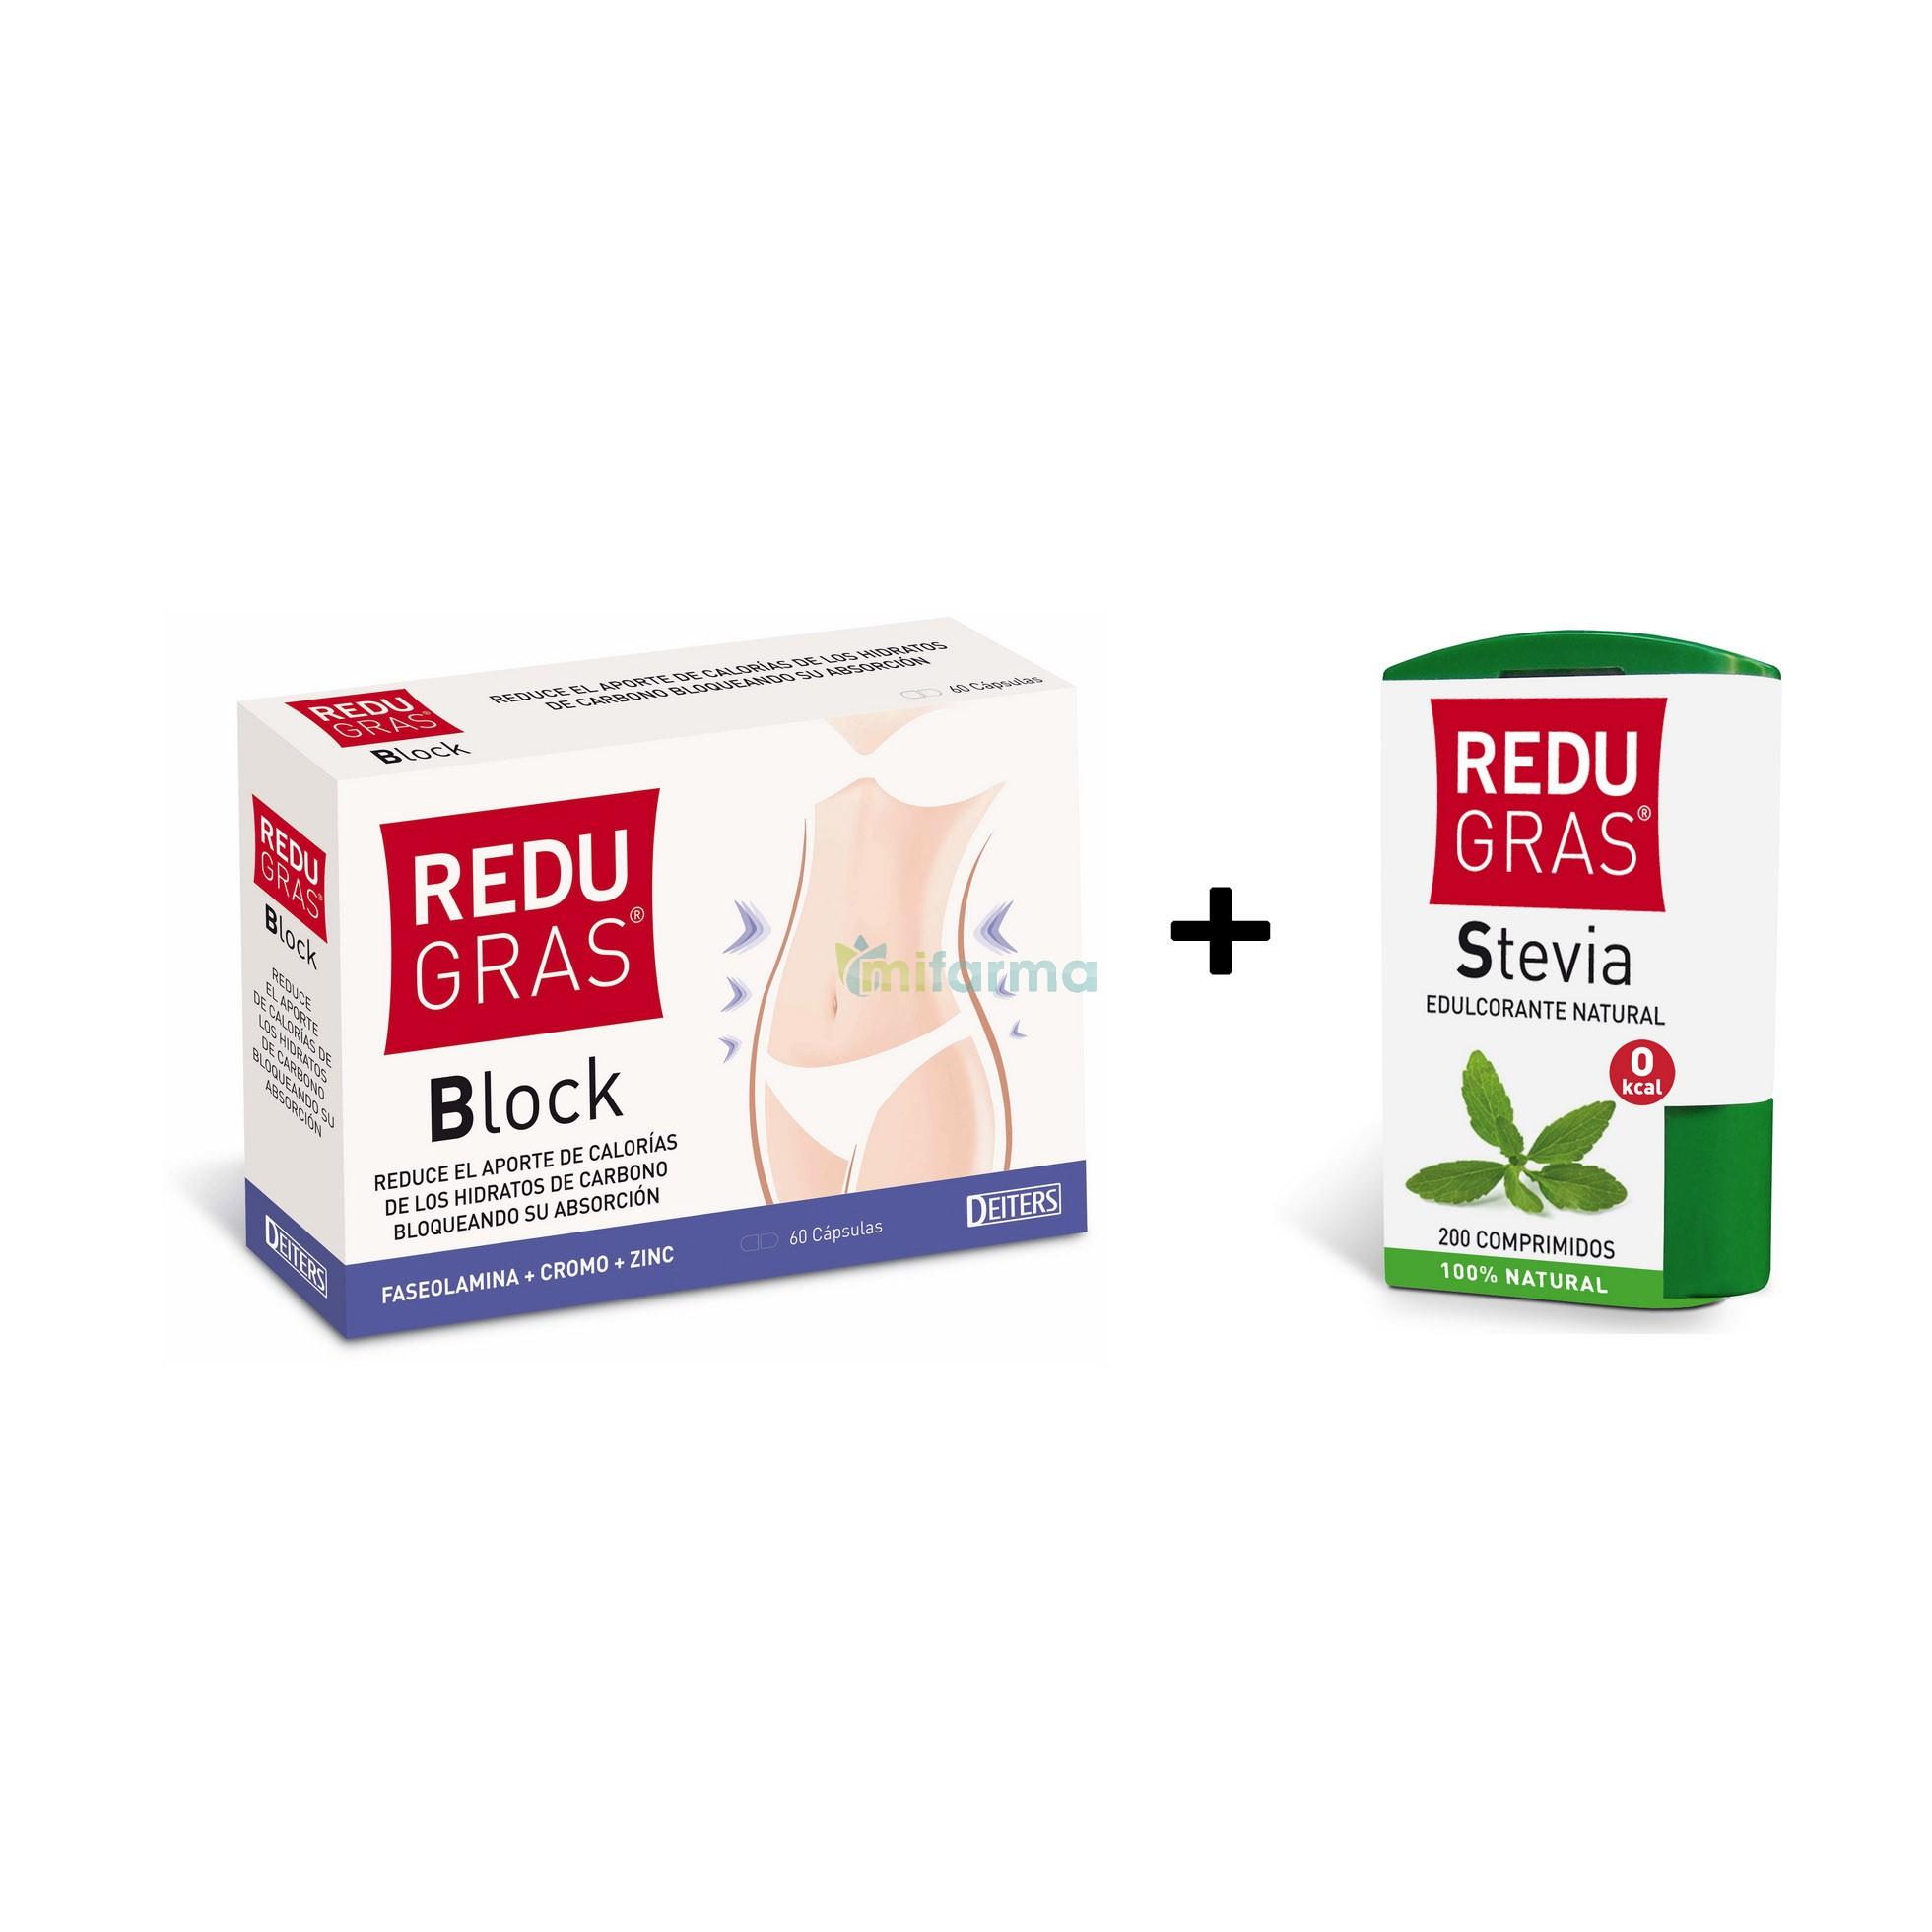 Foto ReduGras Block 60 Capsulas +Regalo: ReduGras Stevia 200 Comprimidos